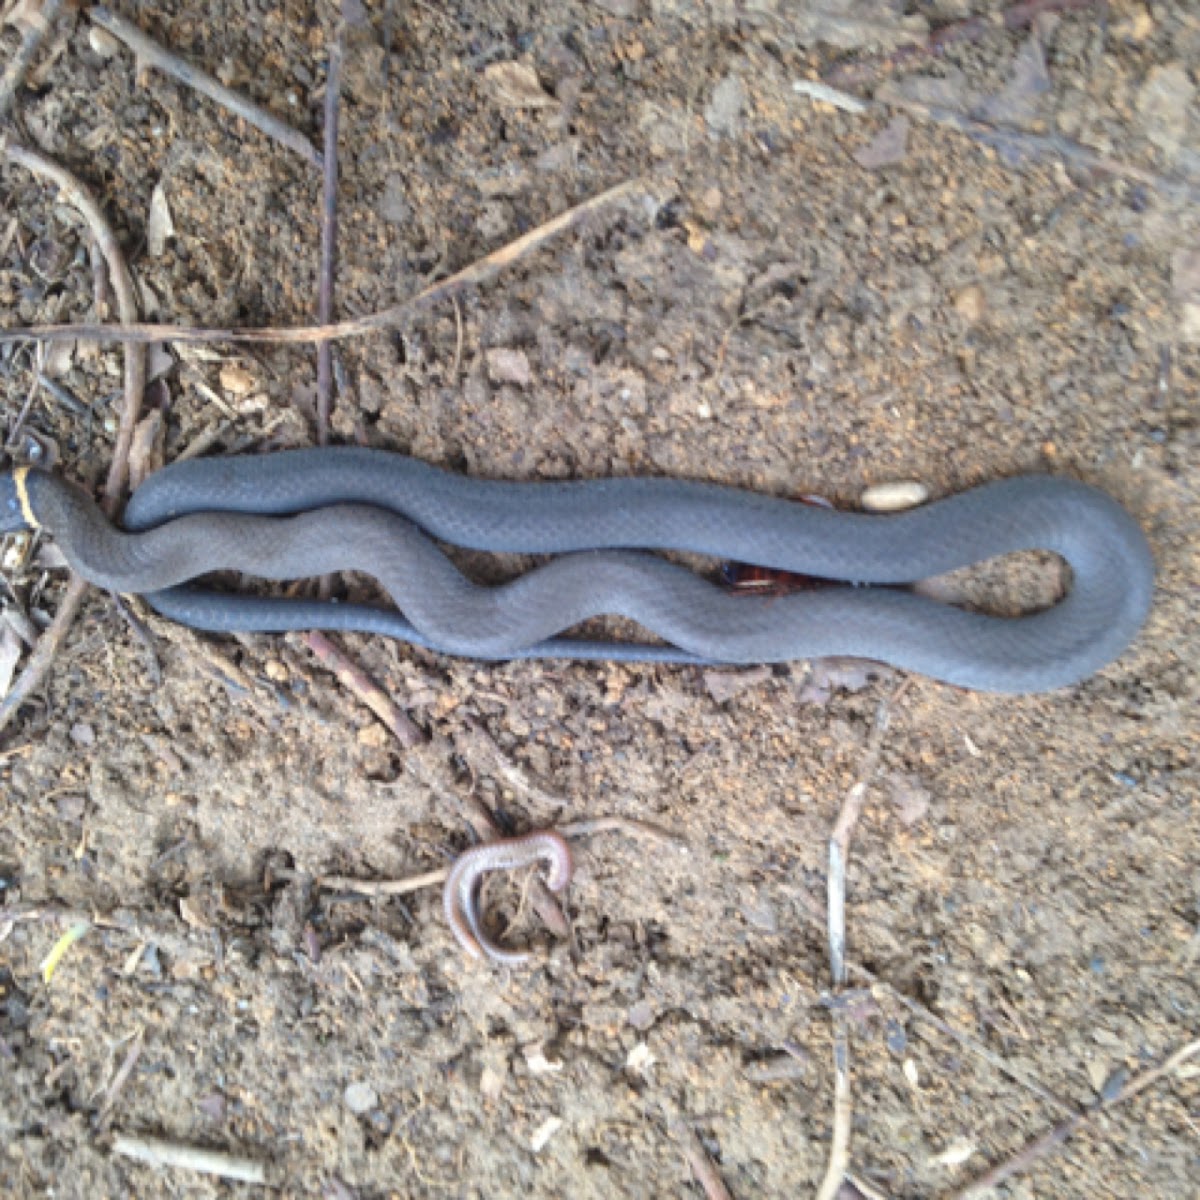 Northern Ring-Neck Snake